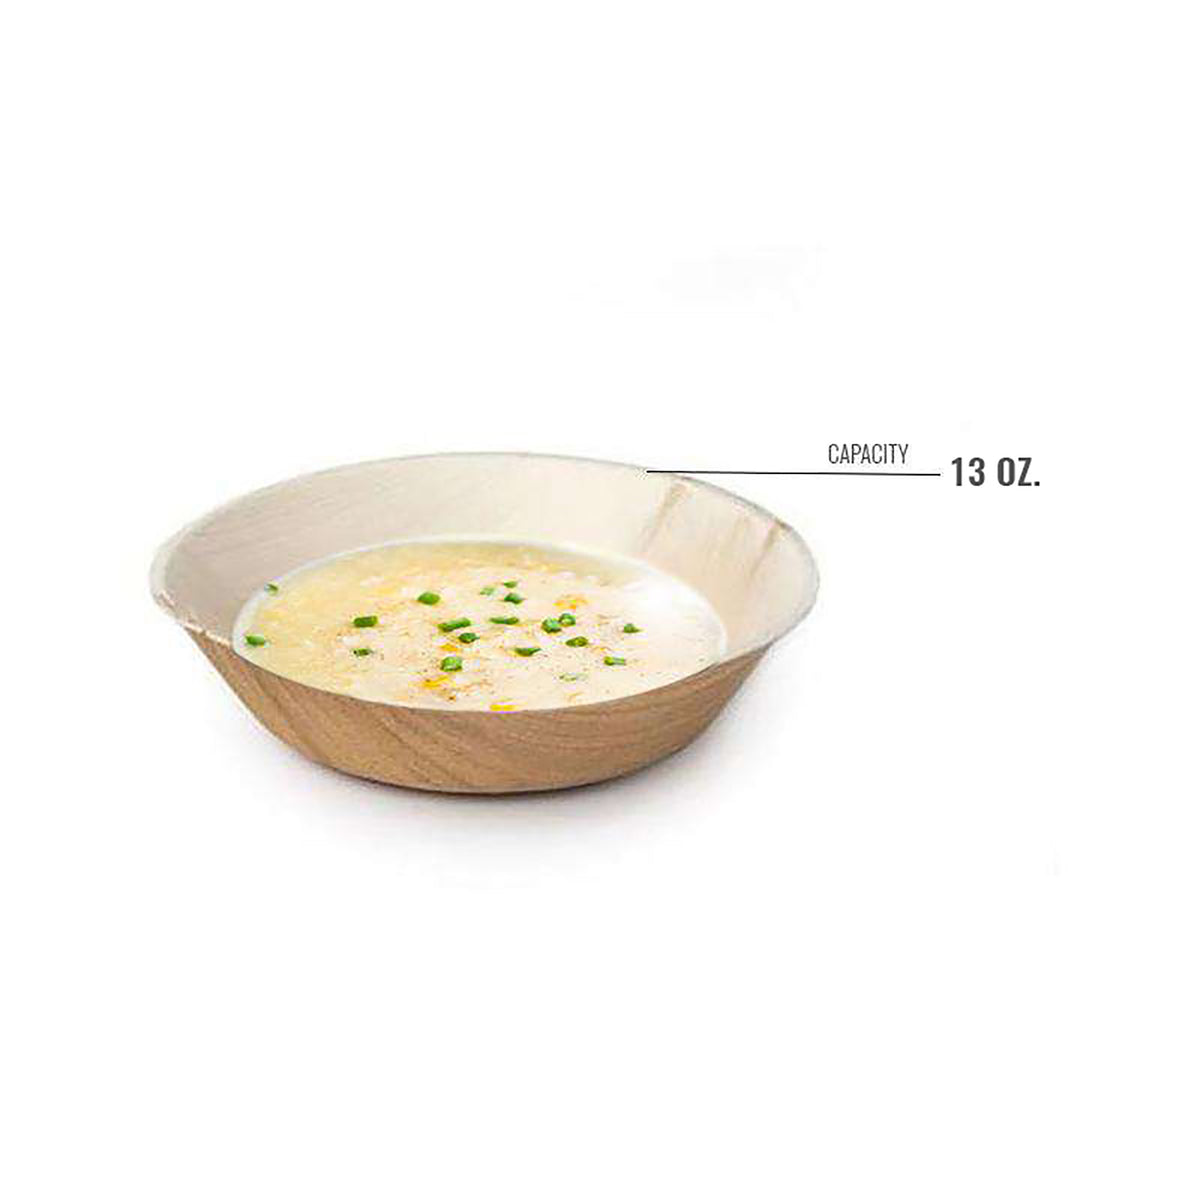 https://www.shopsmartyhadaparty.shop/wp-content/uploads/1692/44/explore-our-13-oz-round-palm-leaf-eco-friendly-disposable-soup-bowls-kaya-collection-for-the-best-bargains_3.jpg